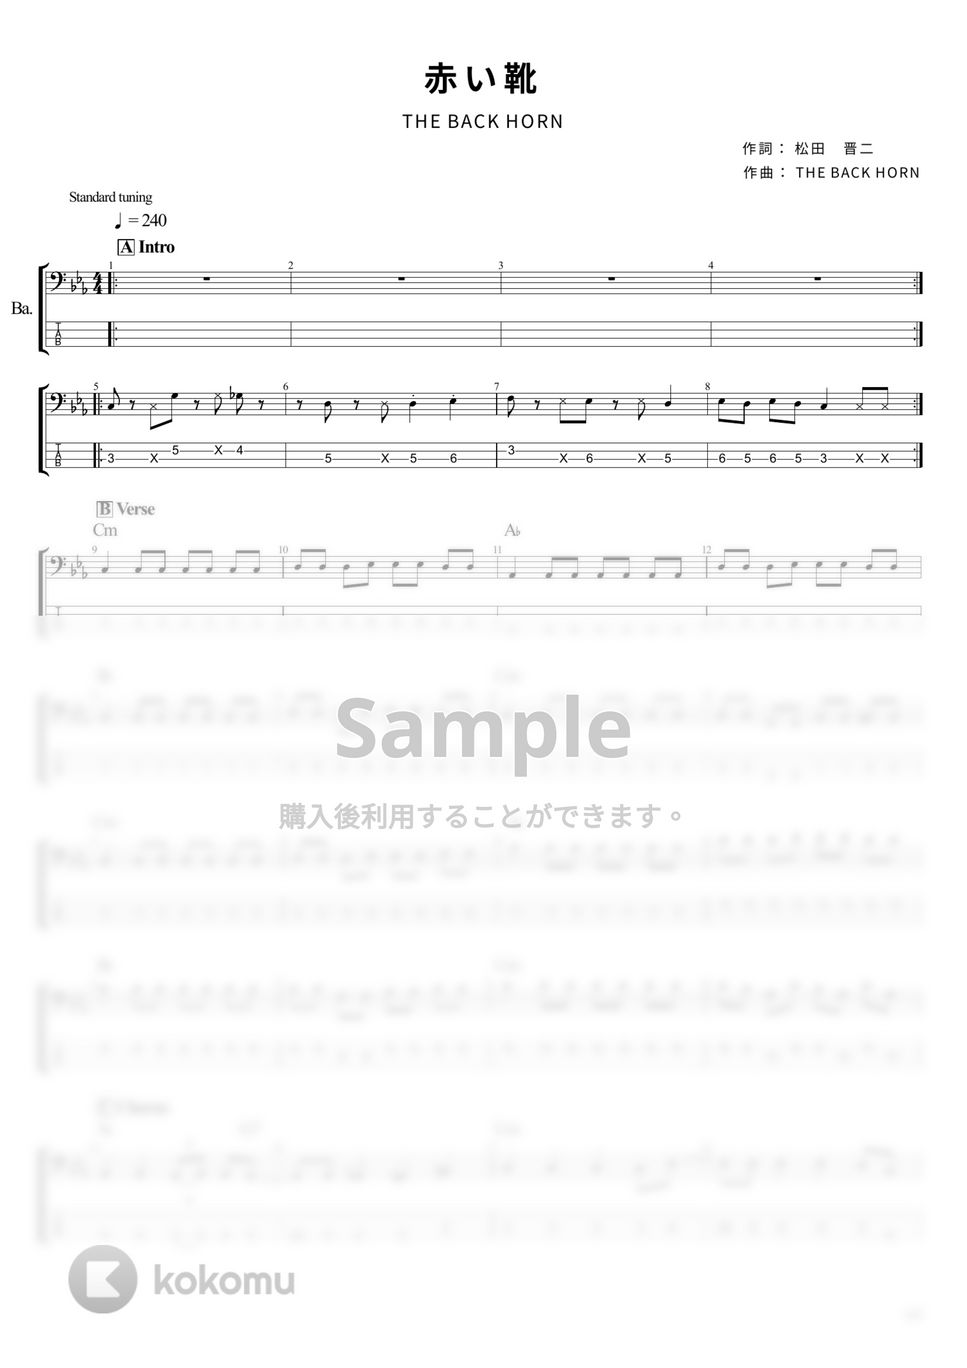 THE BACK HORN - 赤い靴 (ベース Tab譜 4弦) by T's bass score